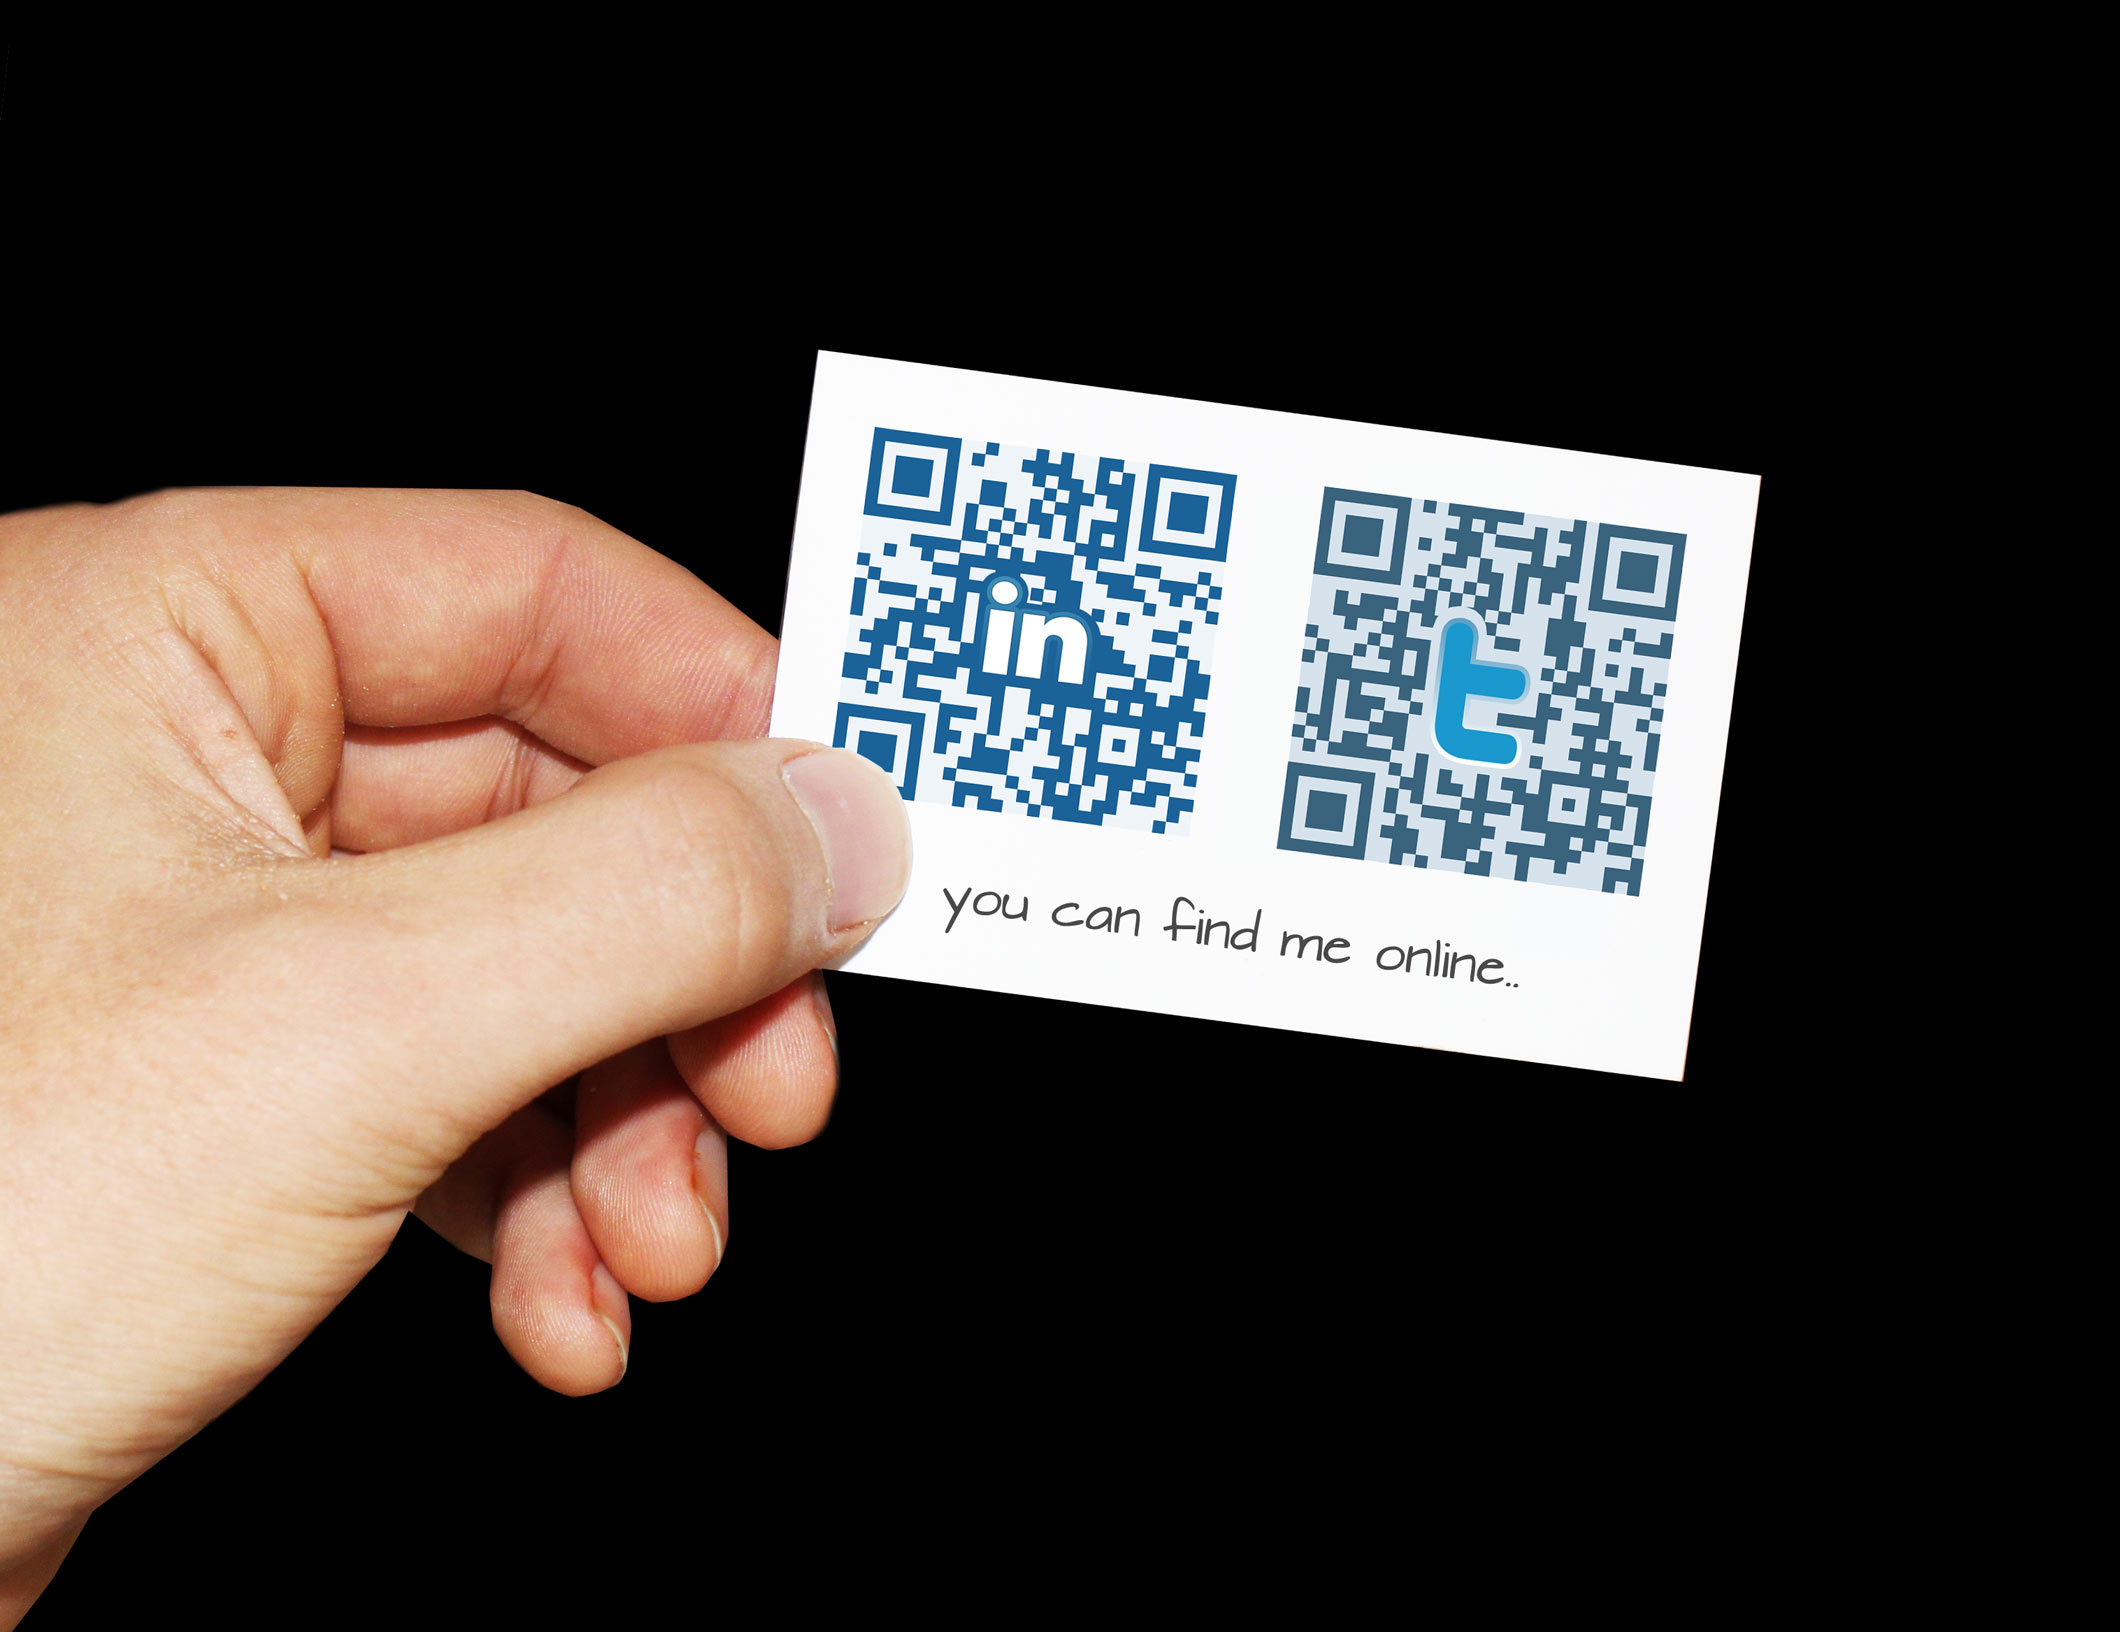 Qr код поставь. Визитка с QR кодом. QR коды на визитке. Образец визитки с QR кодом. Необычная визитка QR код.